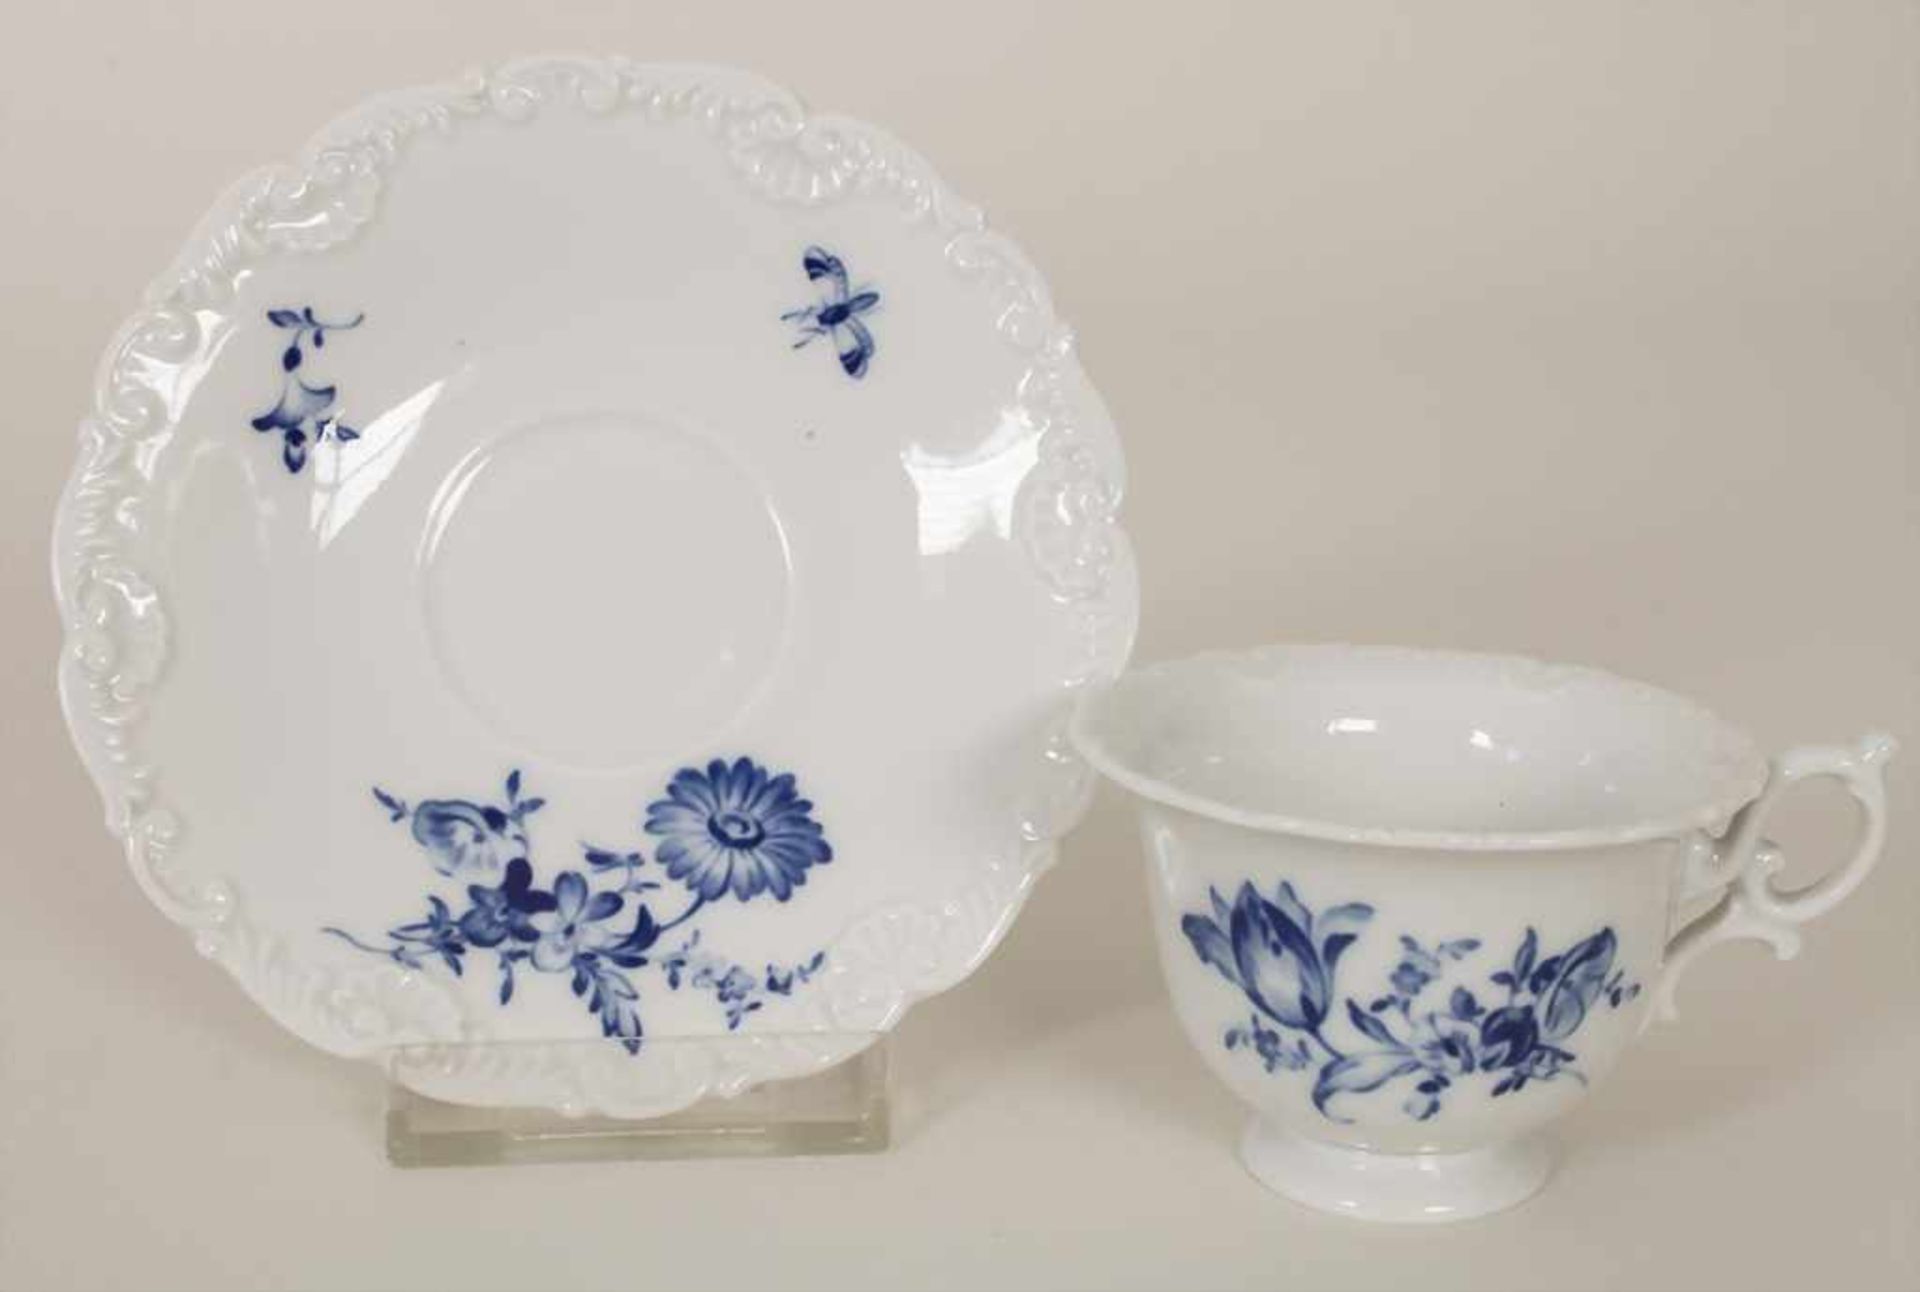 2 Mokkatassen mit Untertassen 'Blaue Blume' / A set of 2 mocha cups and saucers 'Blue Flower', - Image 12 of 14